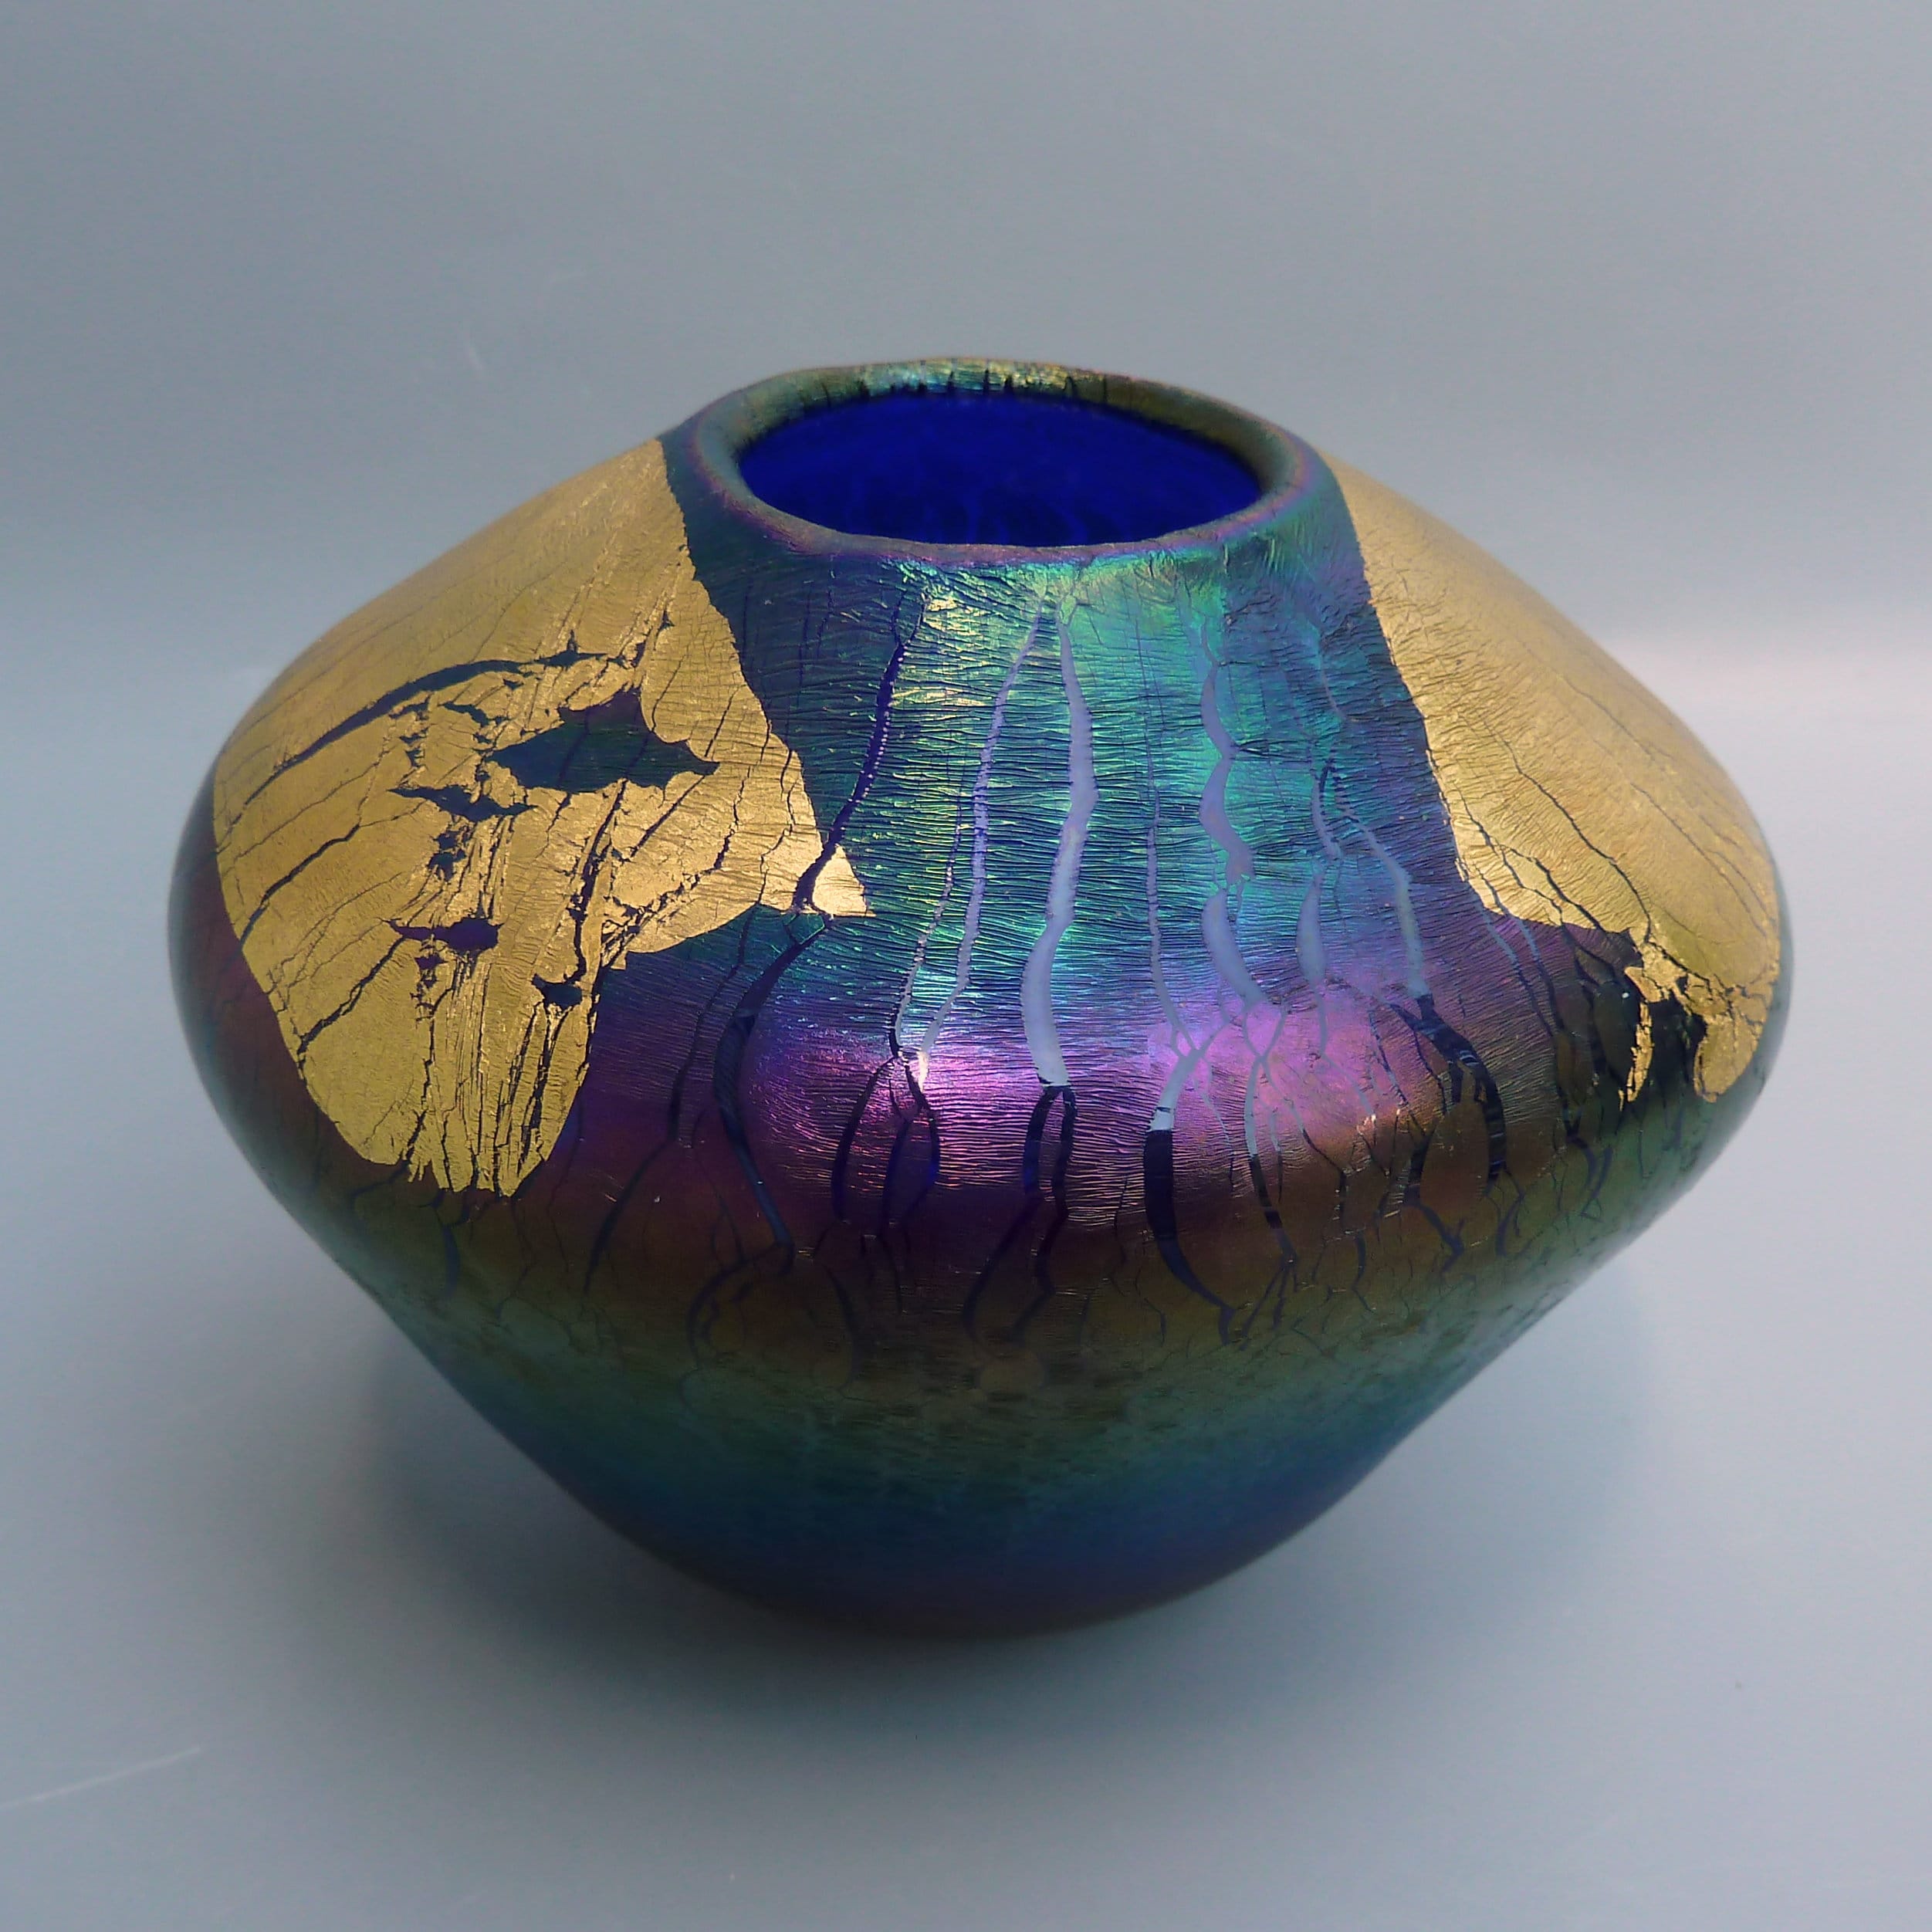 nFLi ROBERT EICKHOLT アートガラス 虹色花瓶 飾り壷